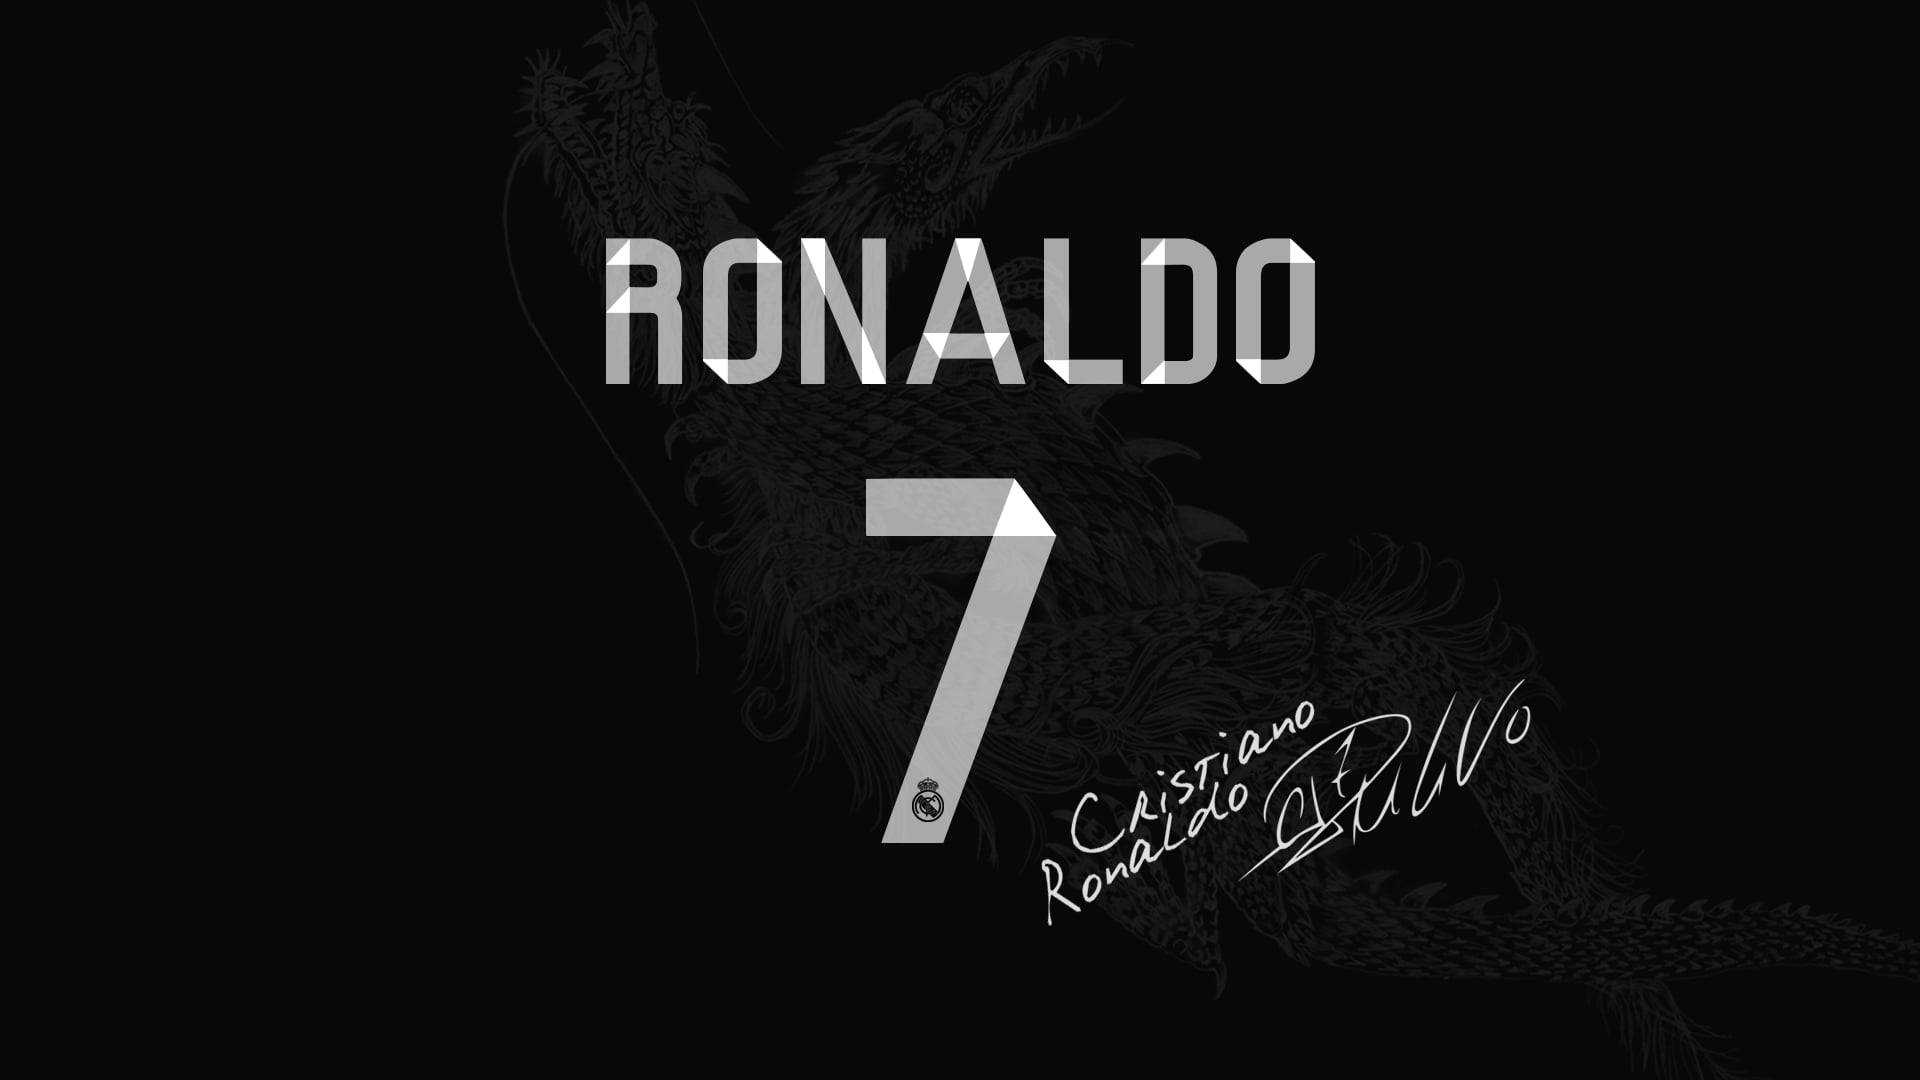 Ronaldo Black Wallpapers - Top 30 Best Ronaldo Black Wallpapers [ HQ ]